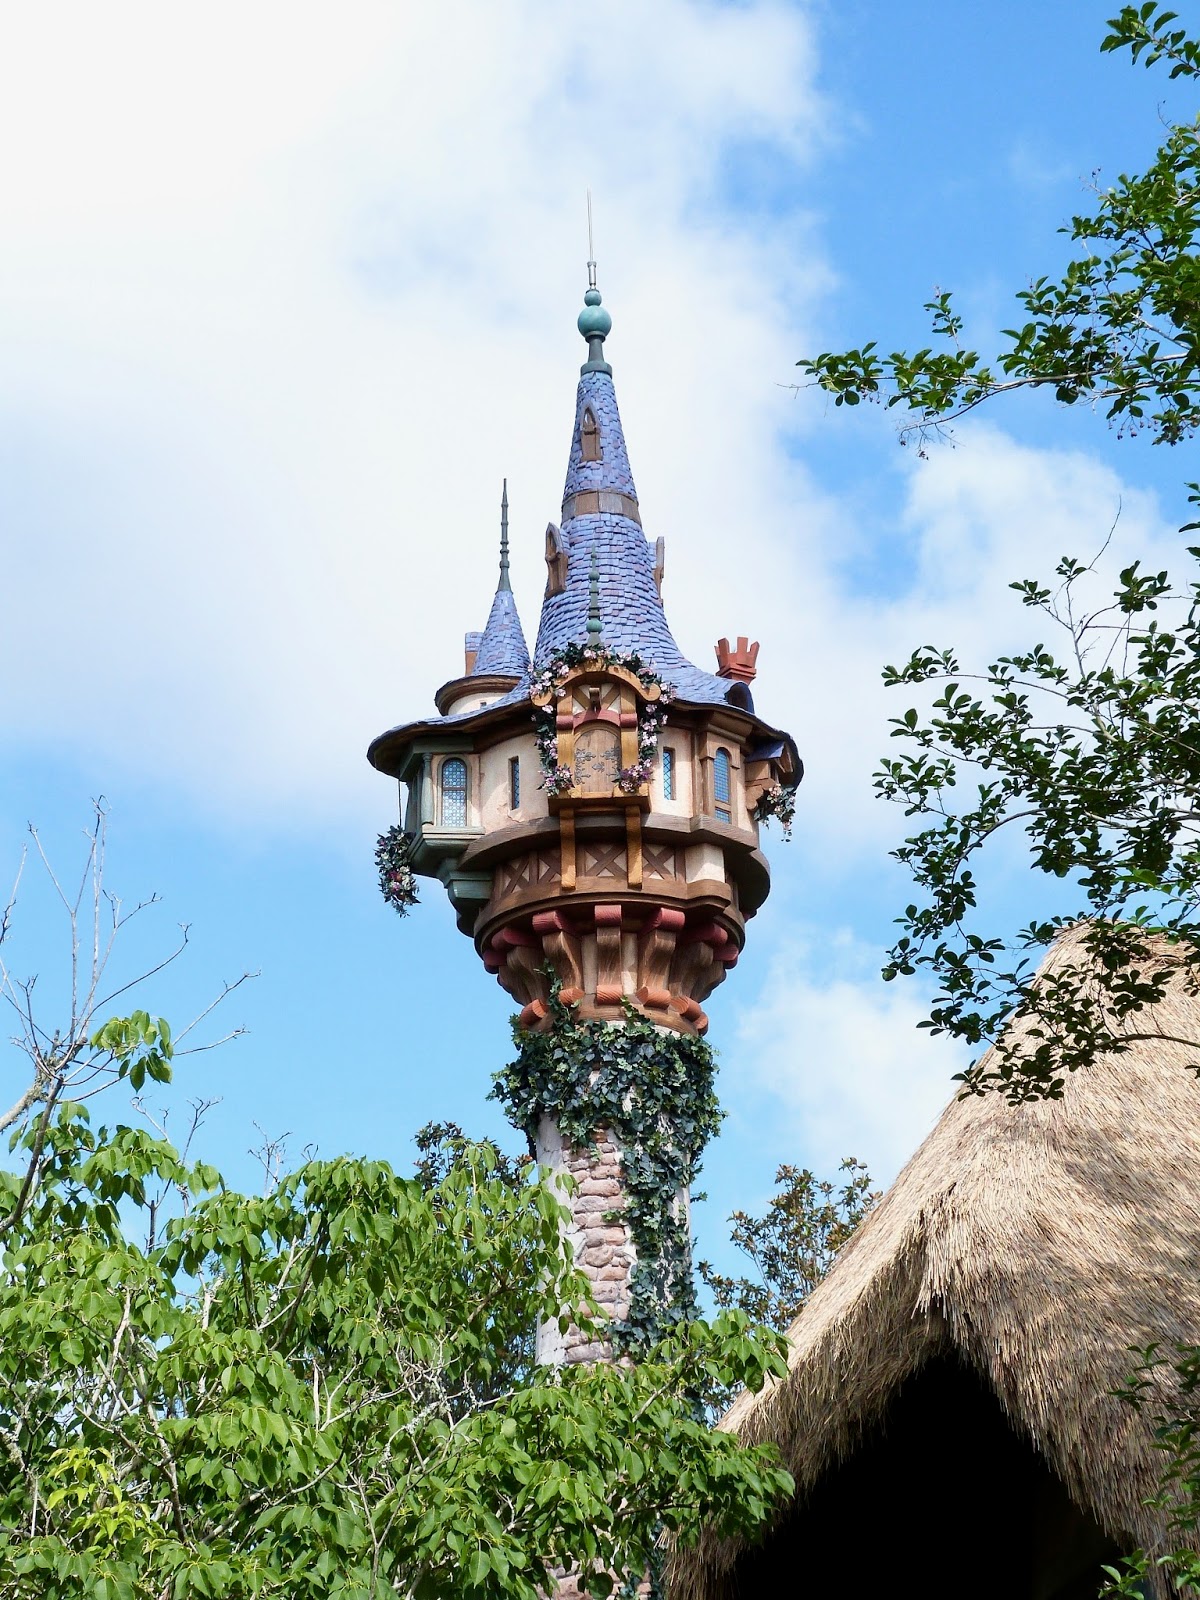 Disney-World-Orlando-Florida-Tangled-tower